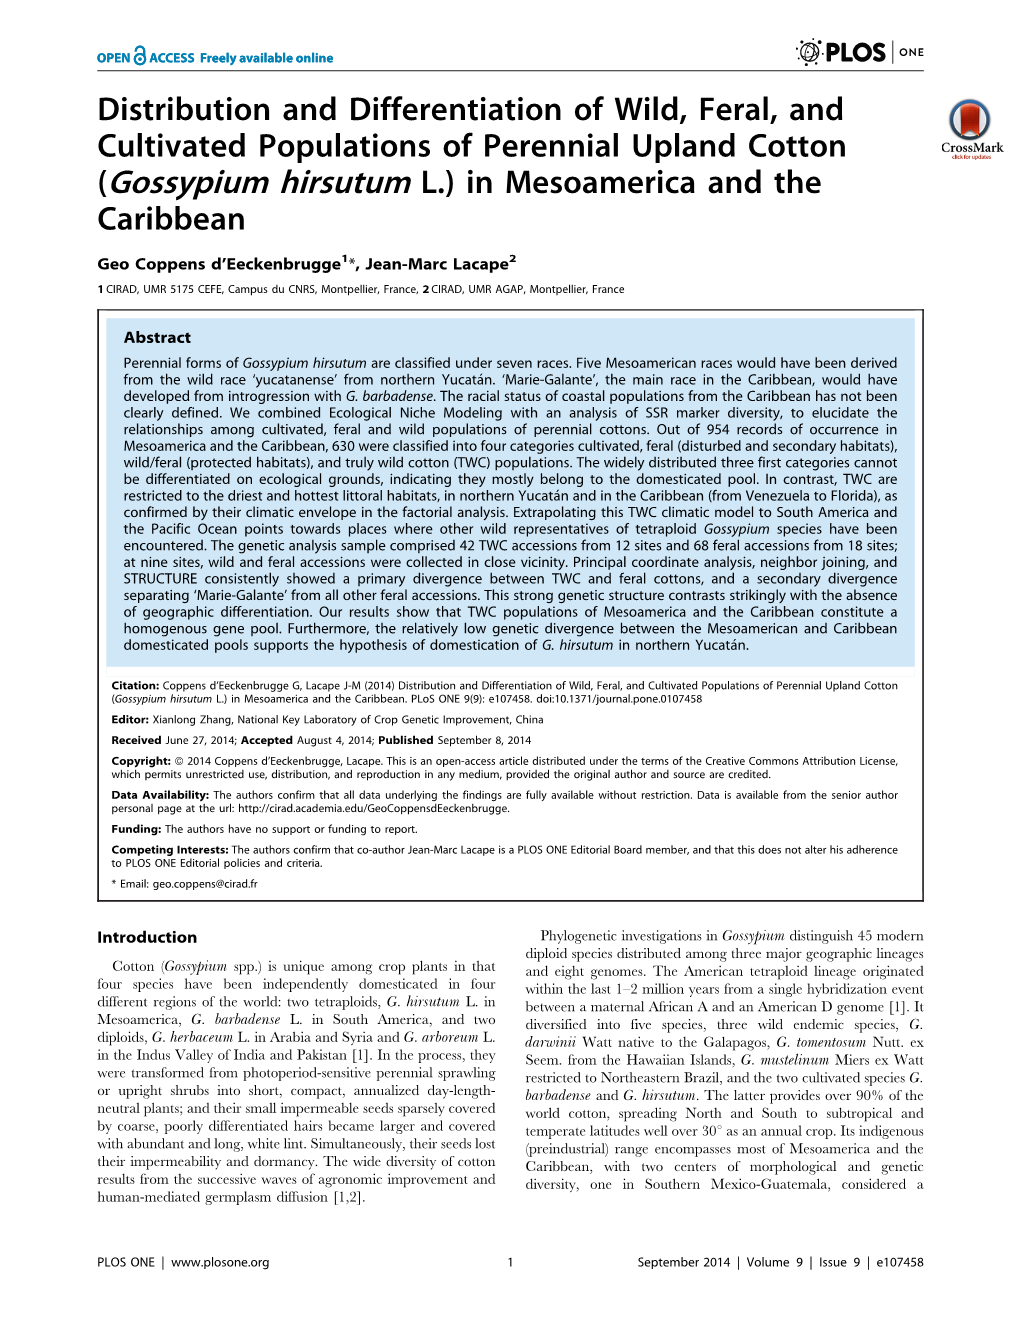 (Gossypium Hirsutum L.) in Mesoamerica and the Caribbean